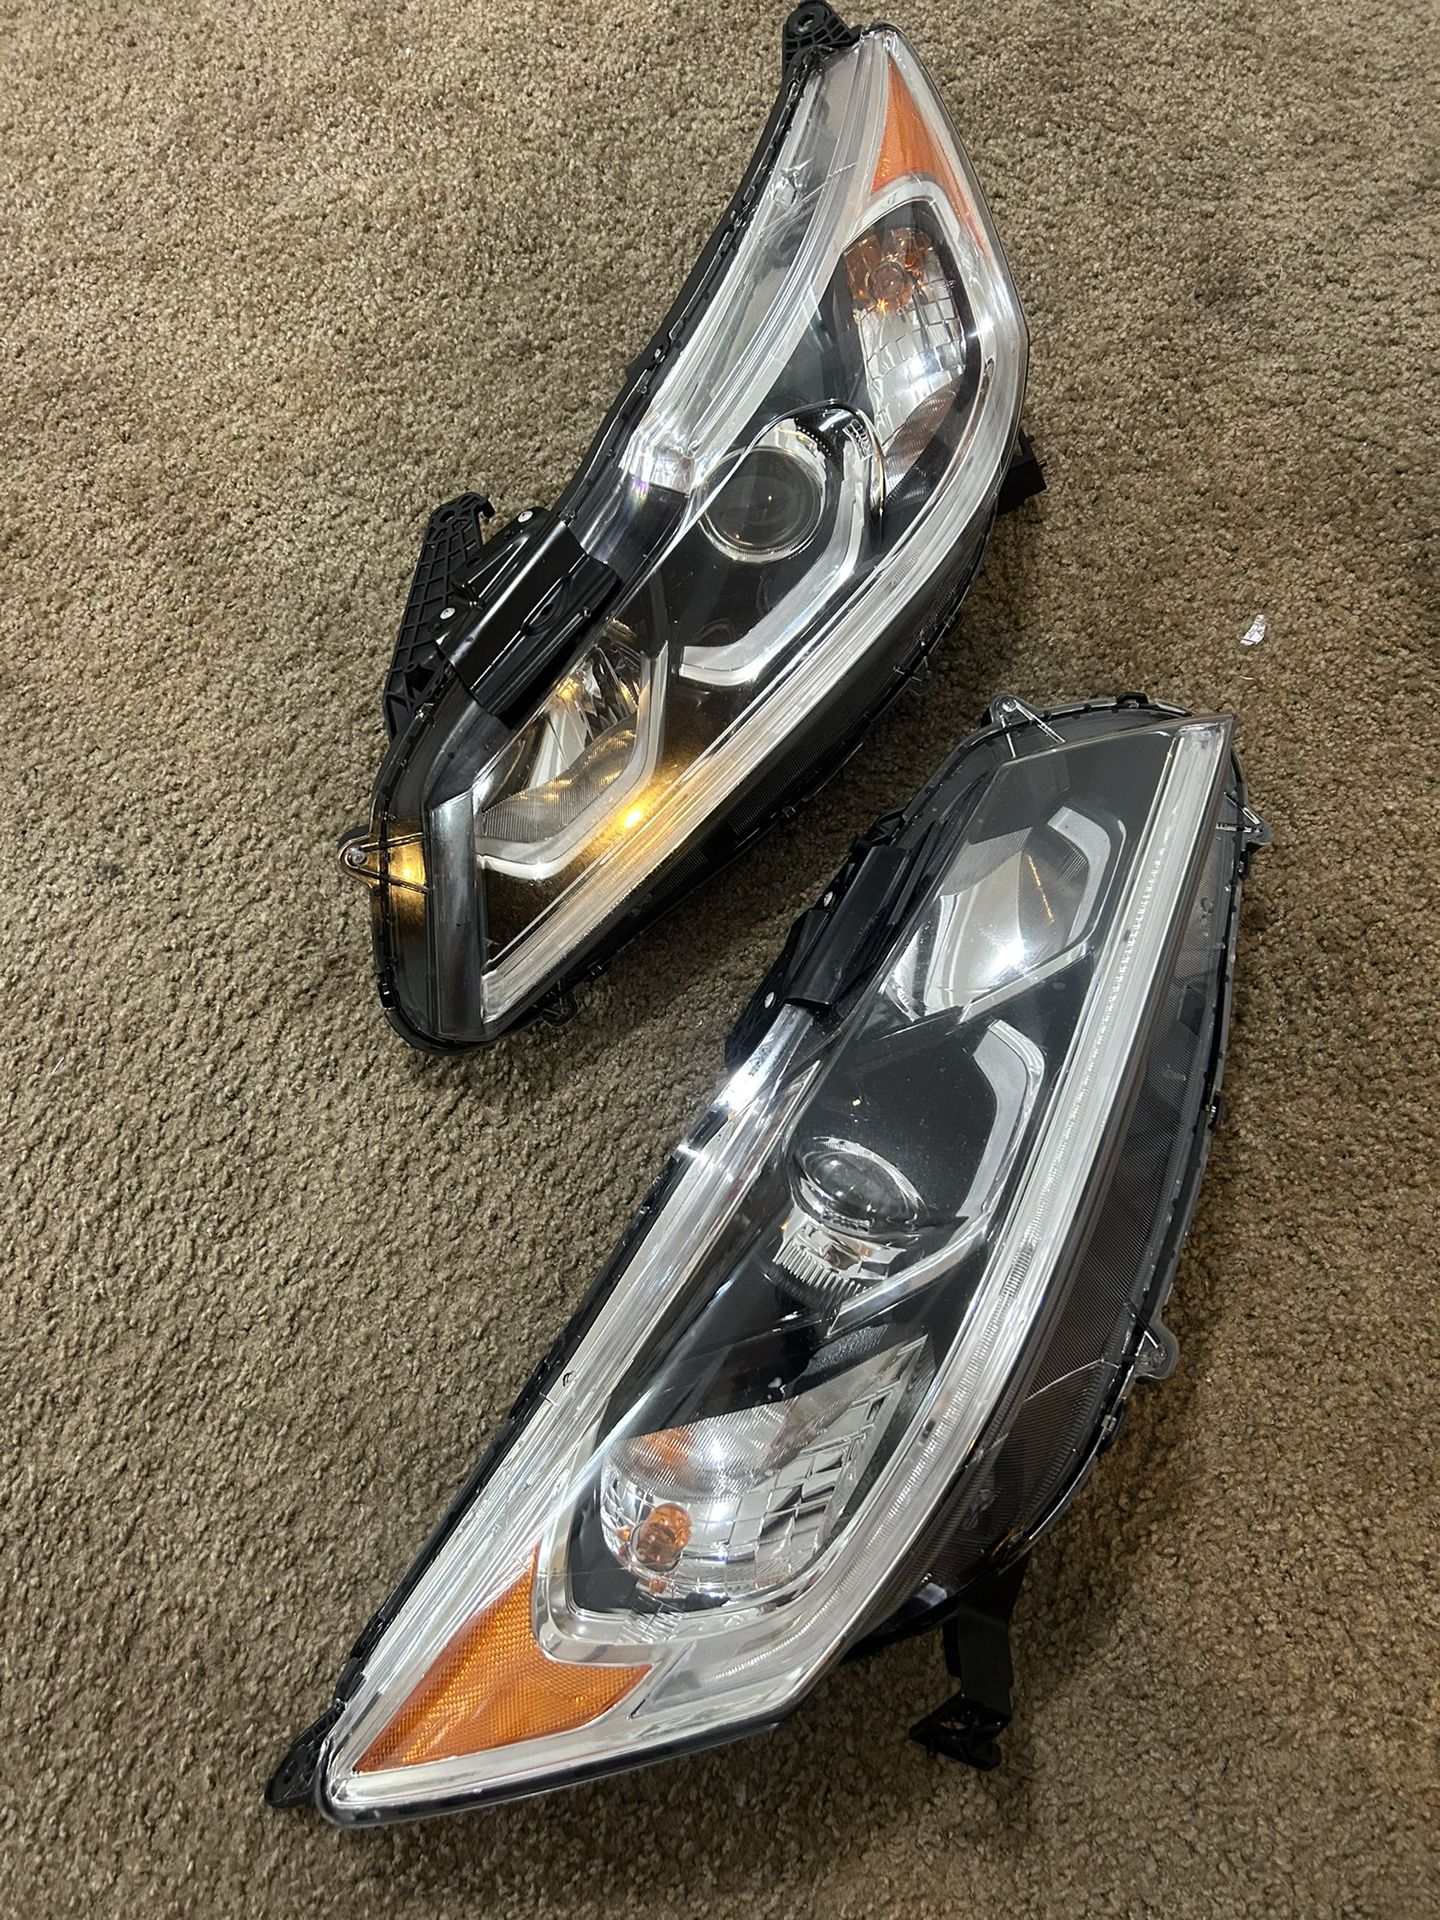 Honda Accord Headlights 